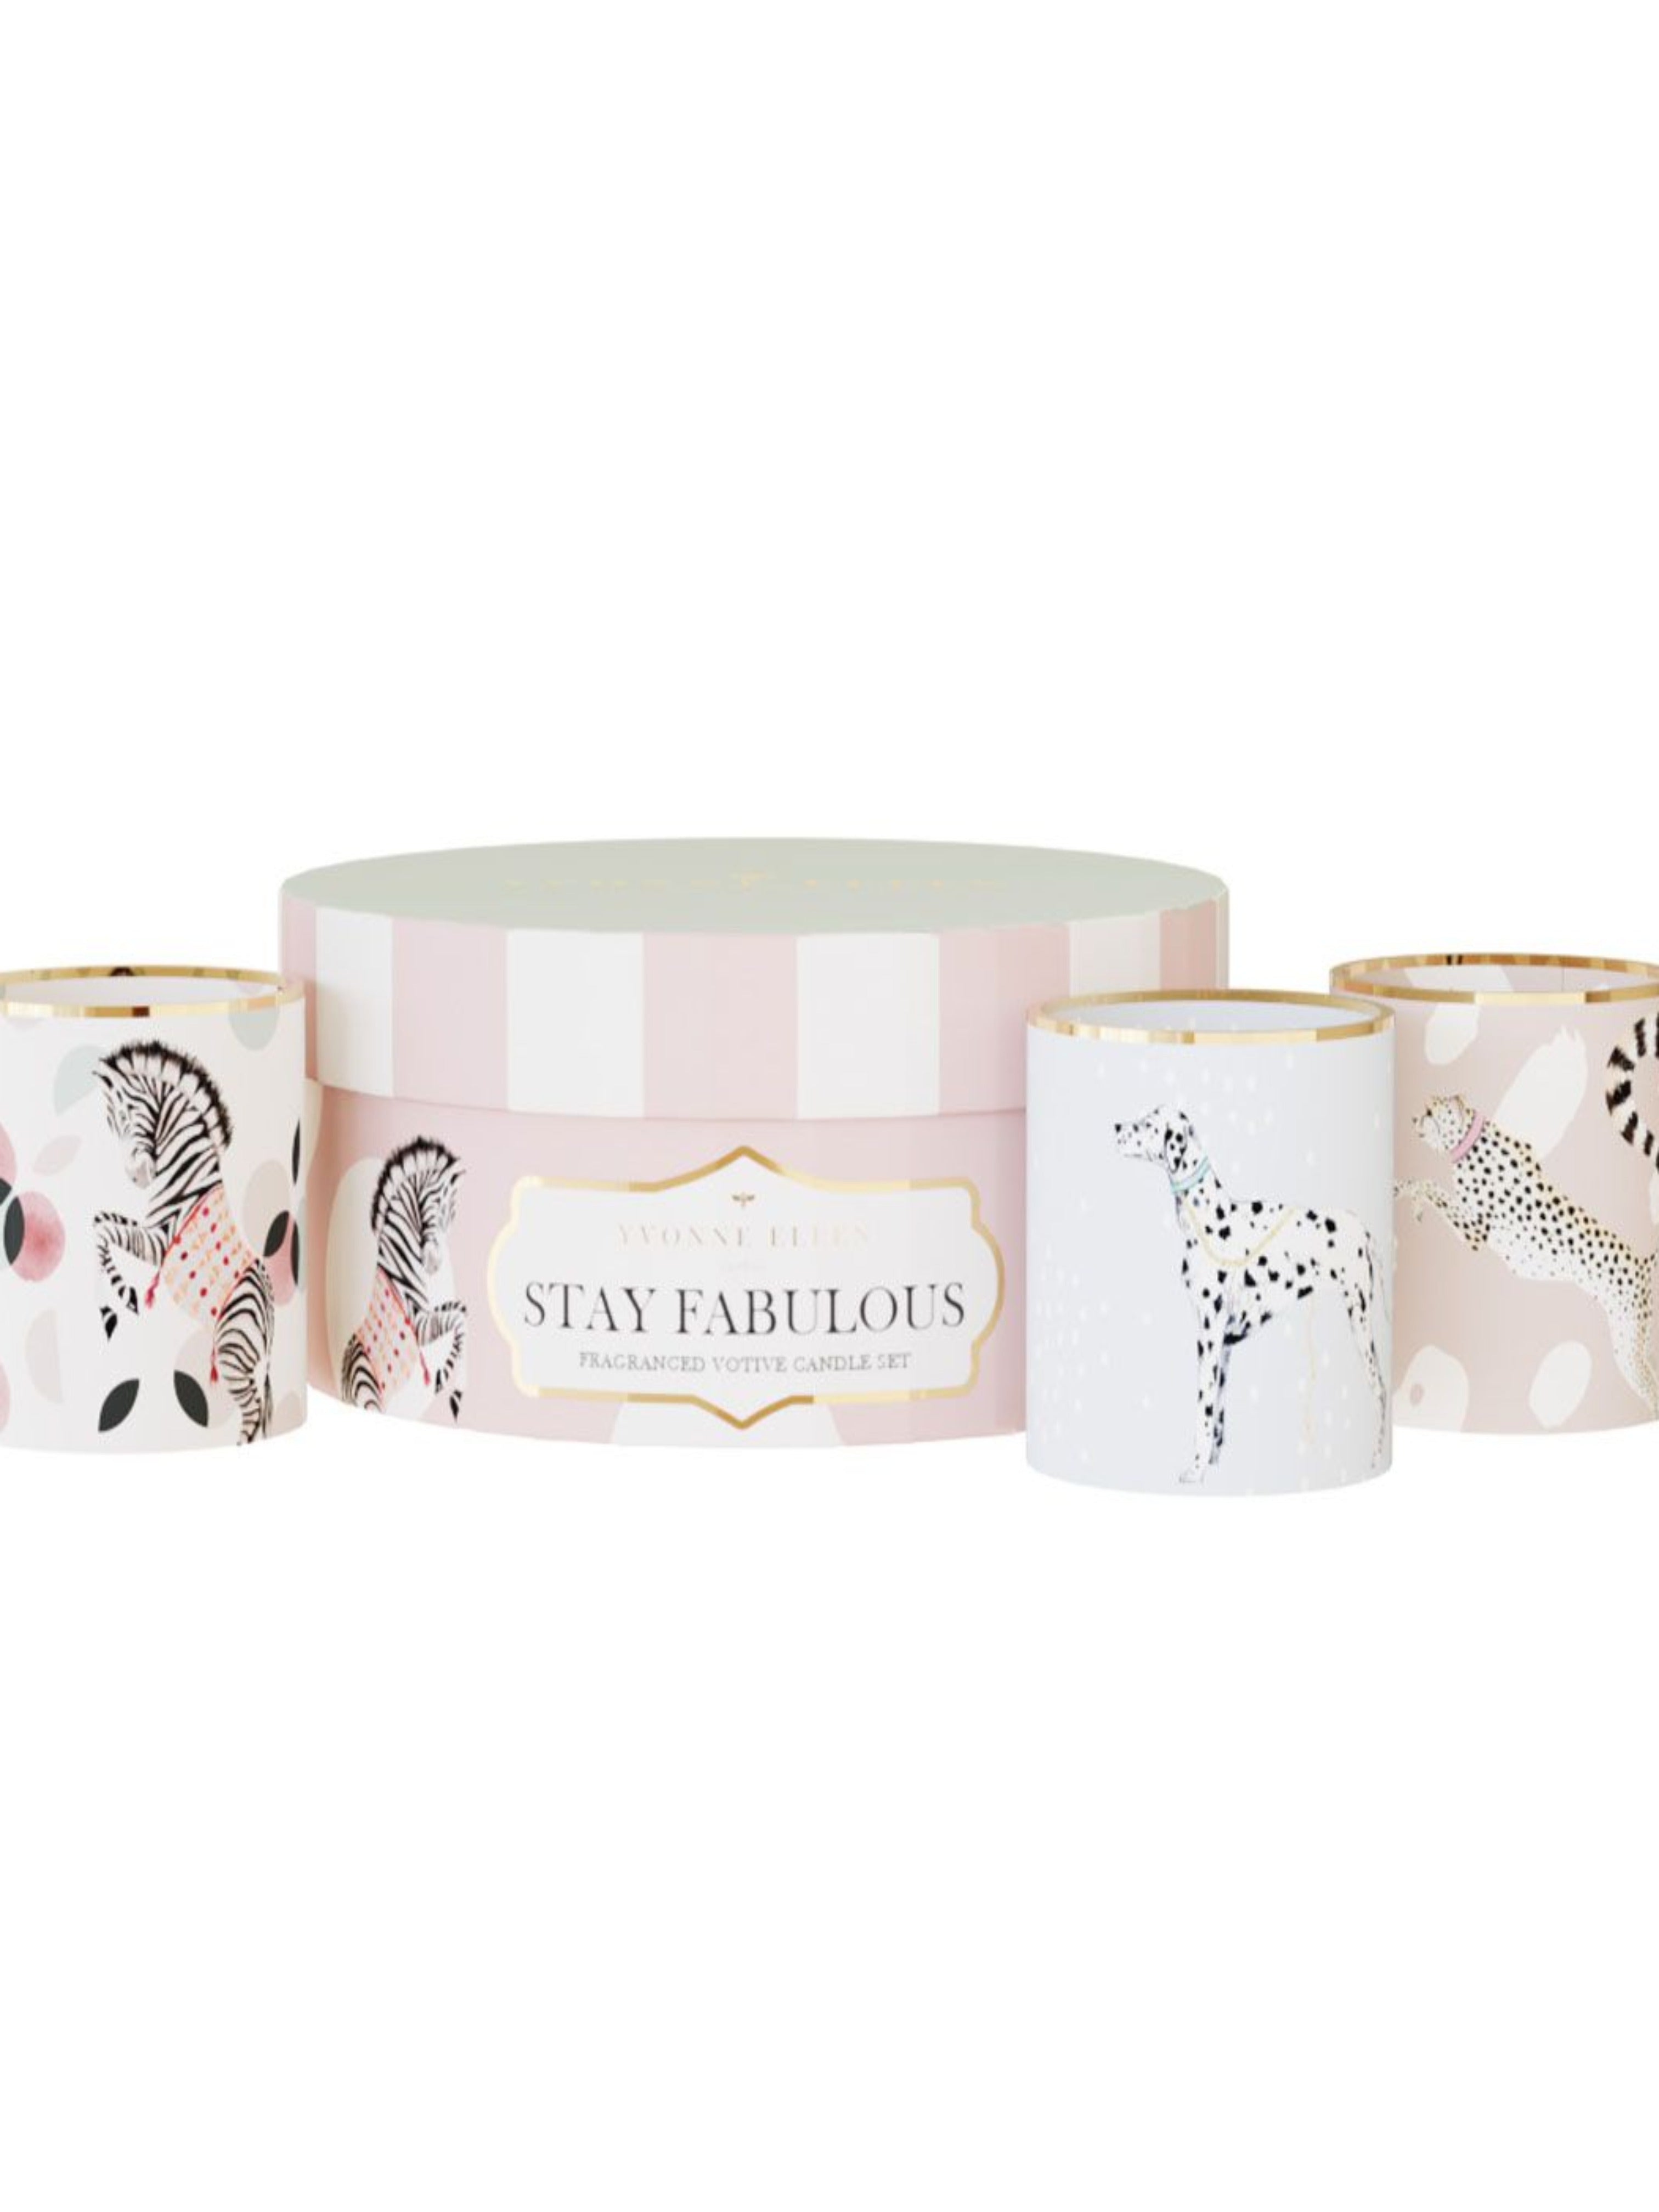 Yvonne Ellen Stay Fabulous Ceramic Candle Gift Set